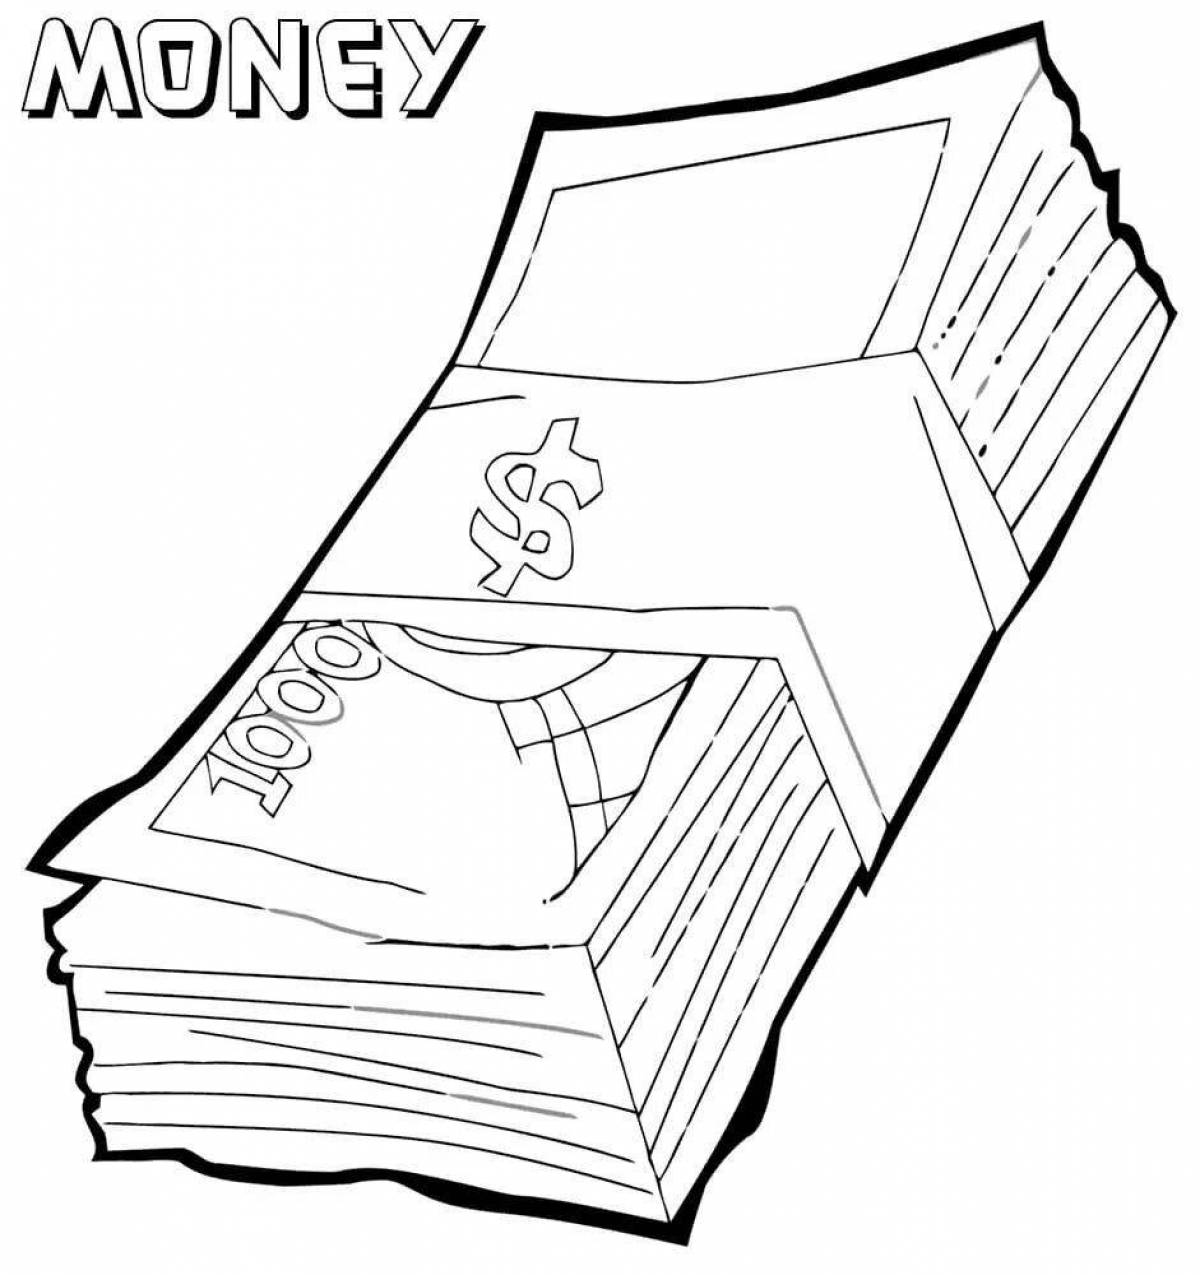 Joyful paper money coloring page